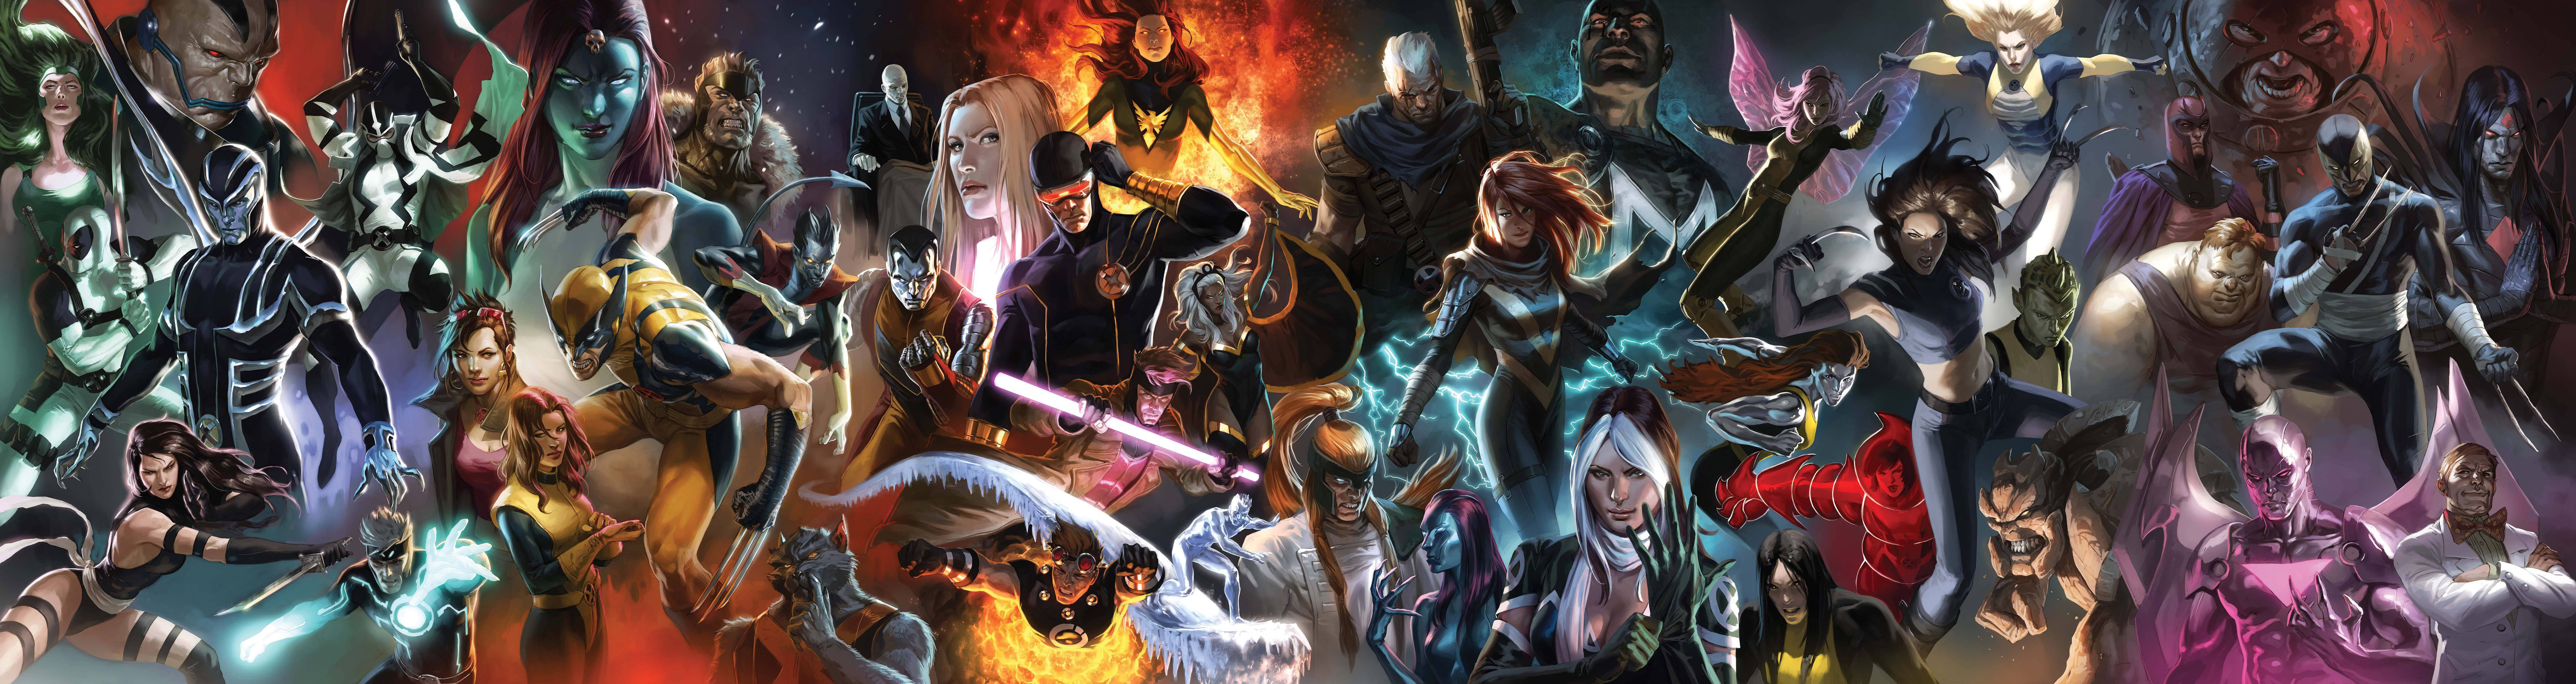 X-men Superheroes Digital Art Background